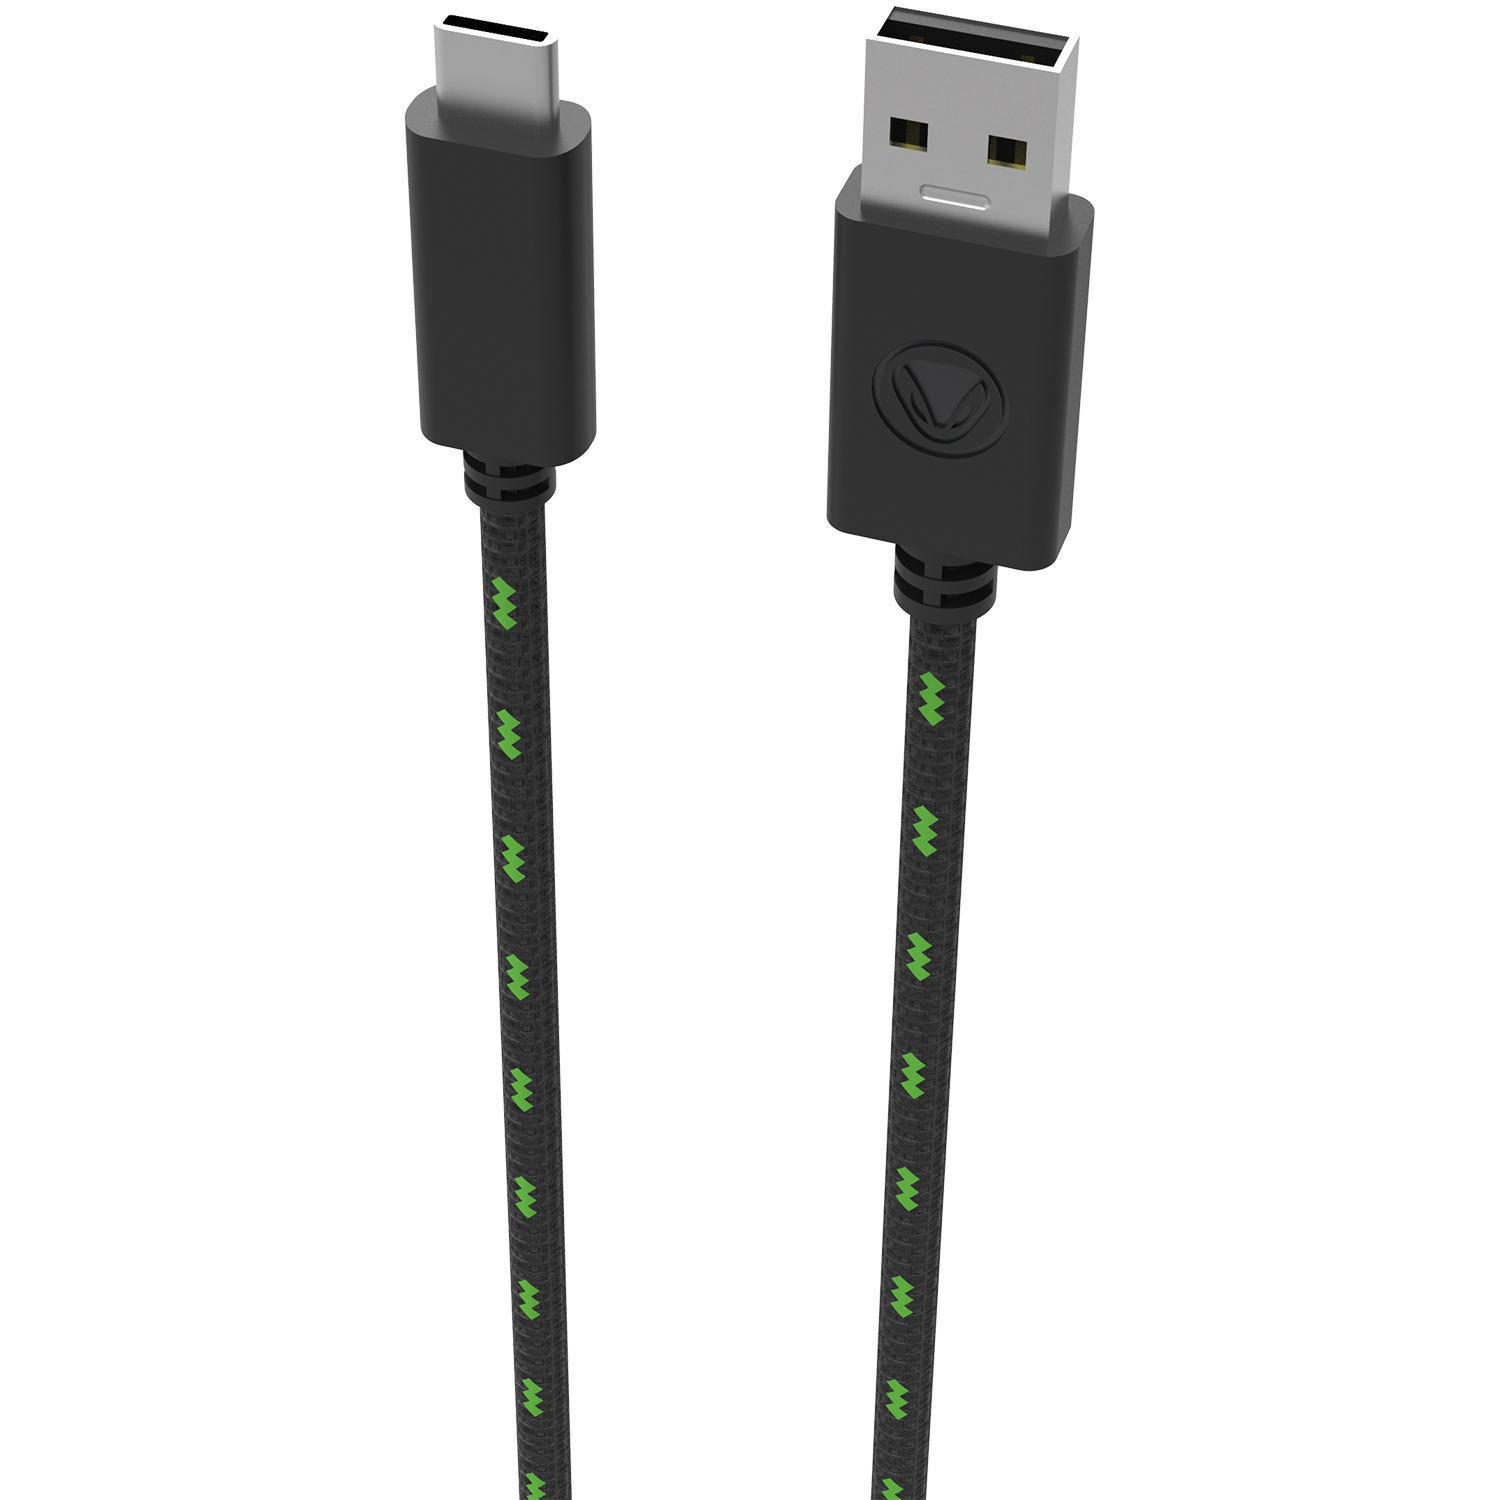 SNAKEBYTE XSX USB Charge: Cable SX Ladekabel, Schwarz/Grün PRO™ 2.0 (5M) Type-C USB